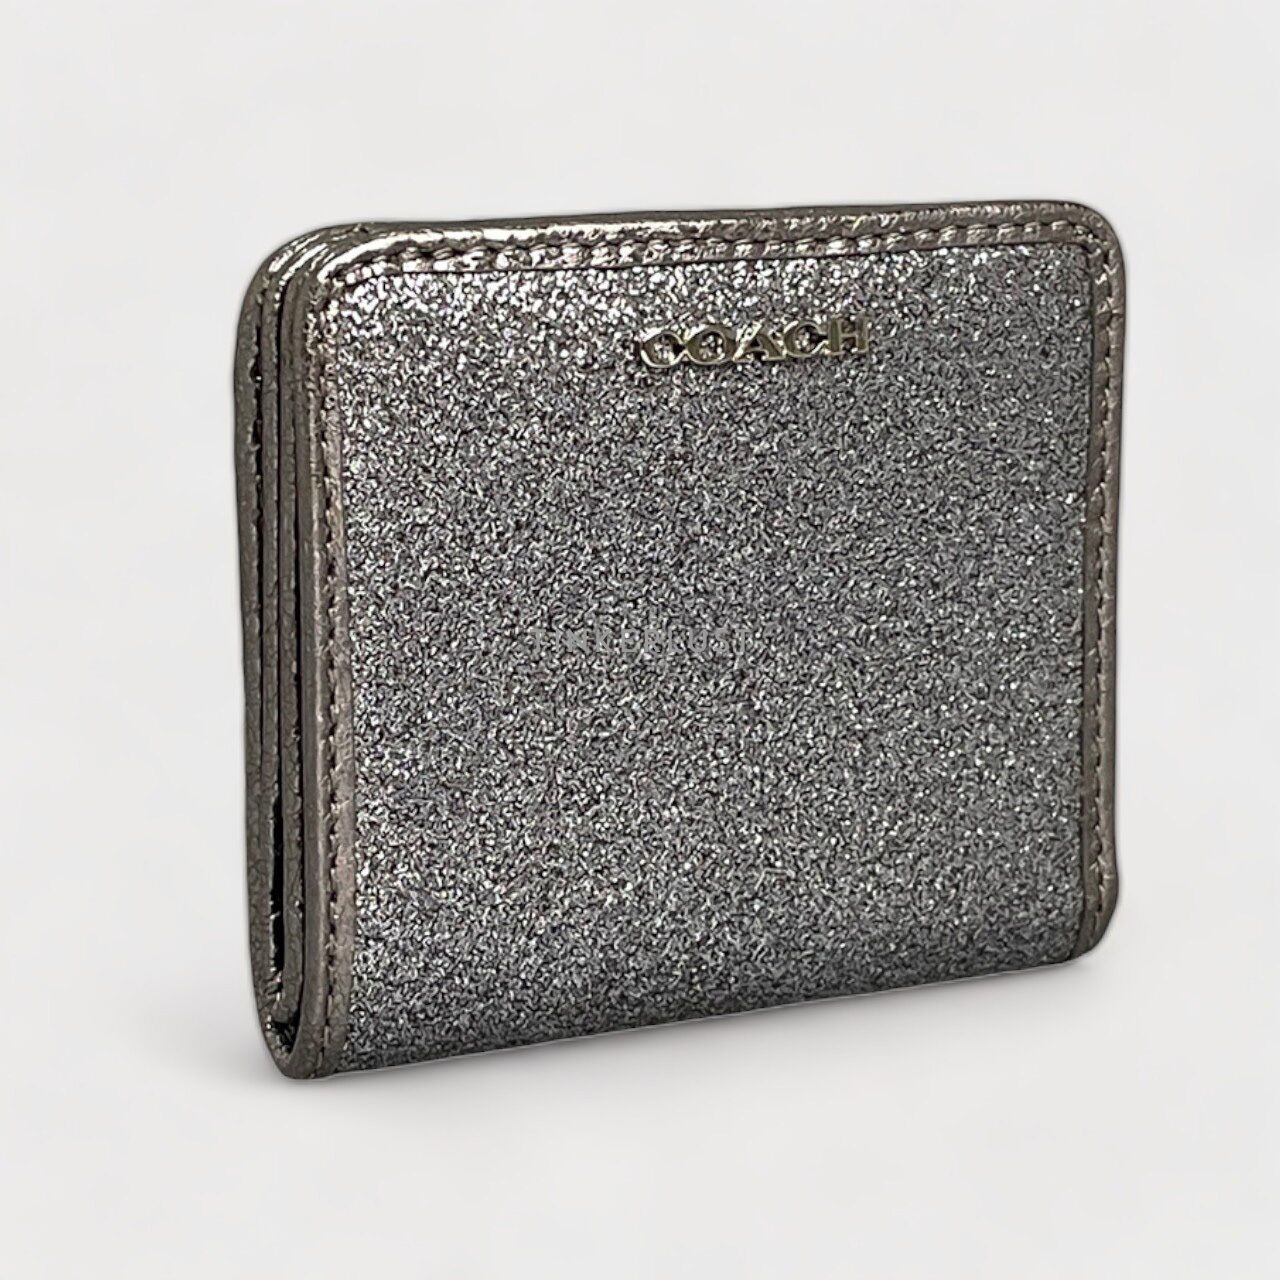 Coach Vintage Glitter Silver Wallet